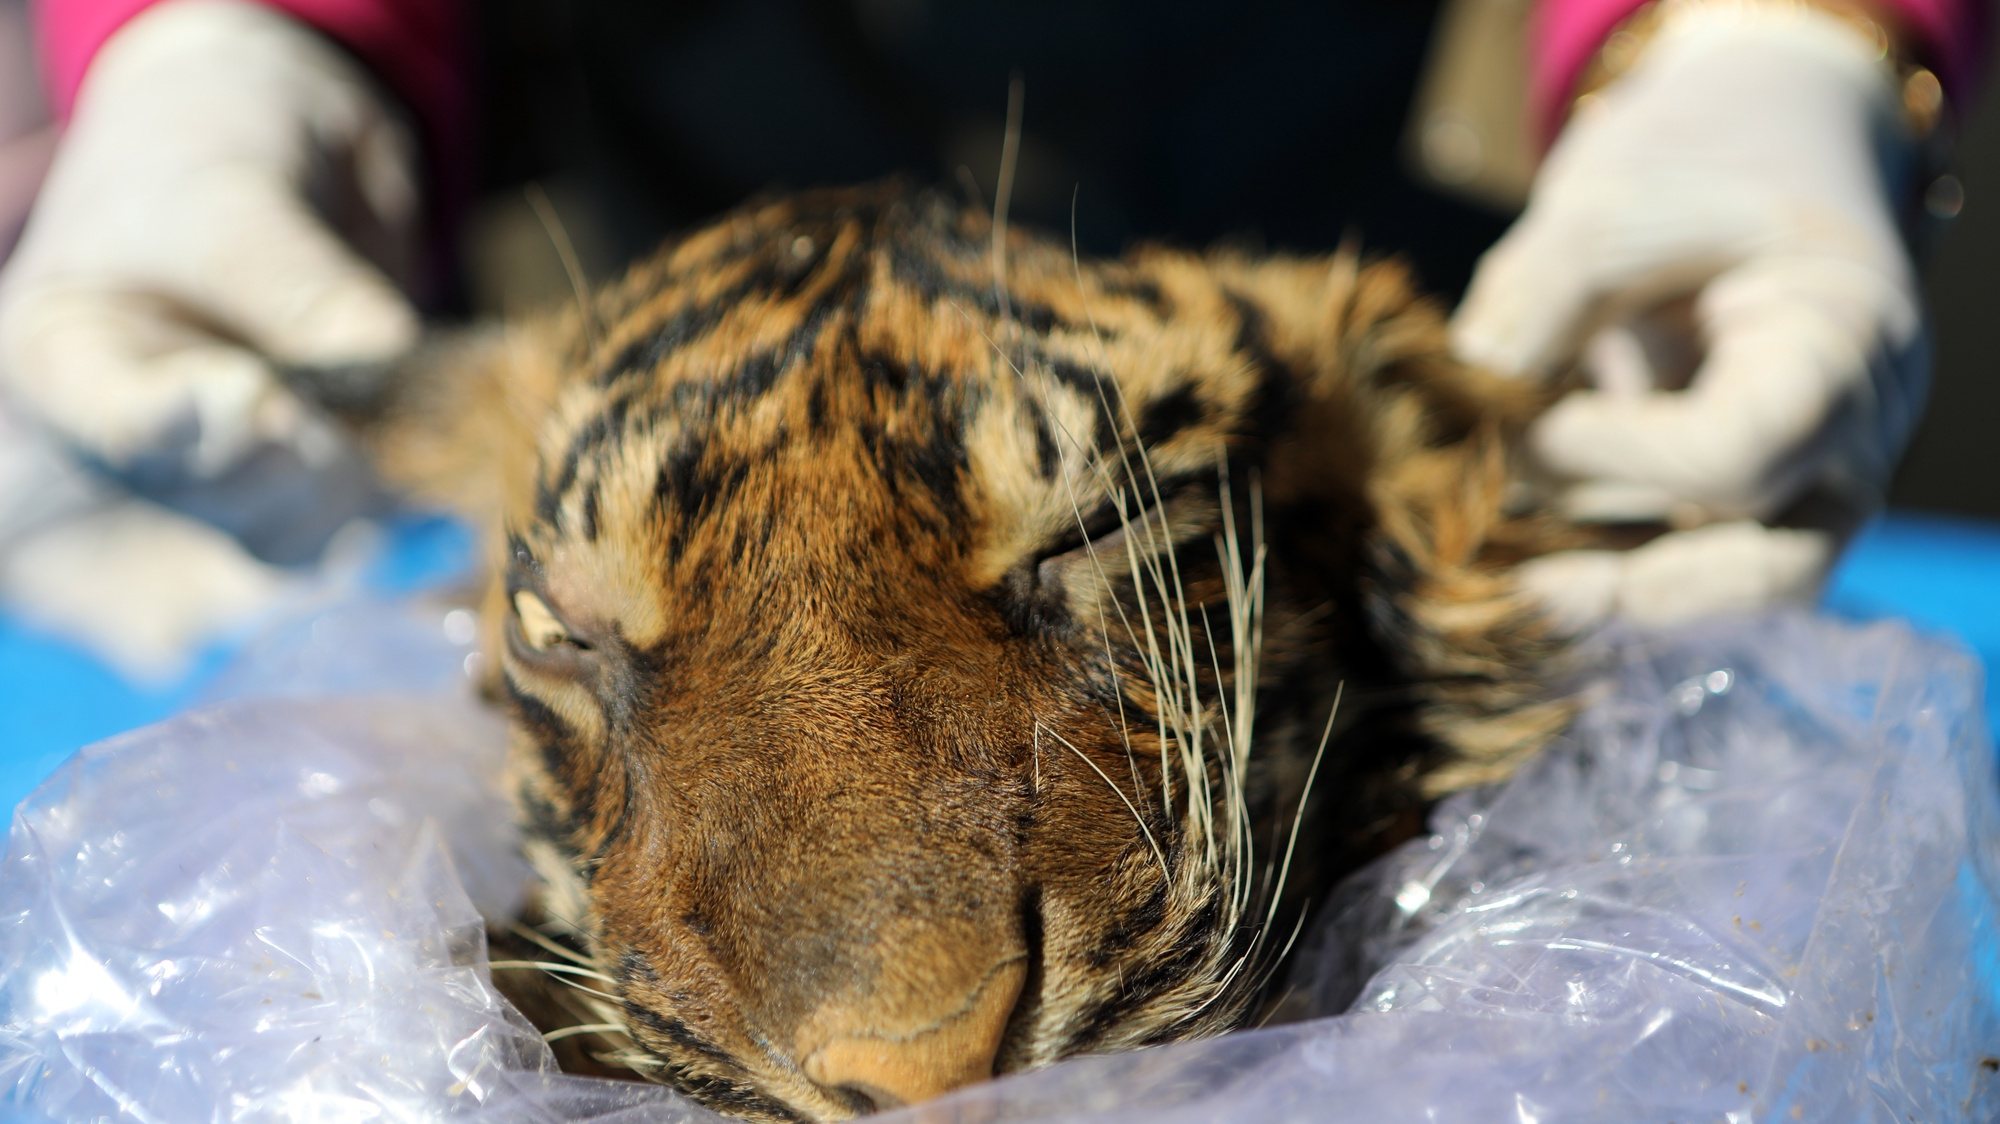 Indonesian police confiscate tiger skin from illegal wildlife trader EPA/Hotli Simanjuntak